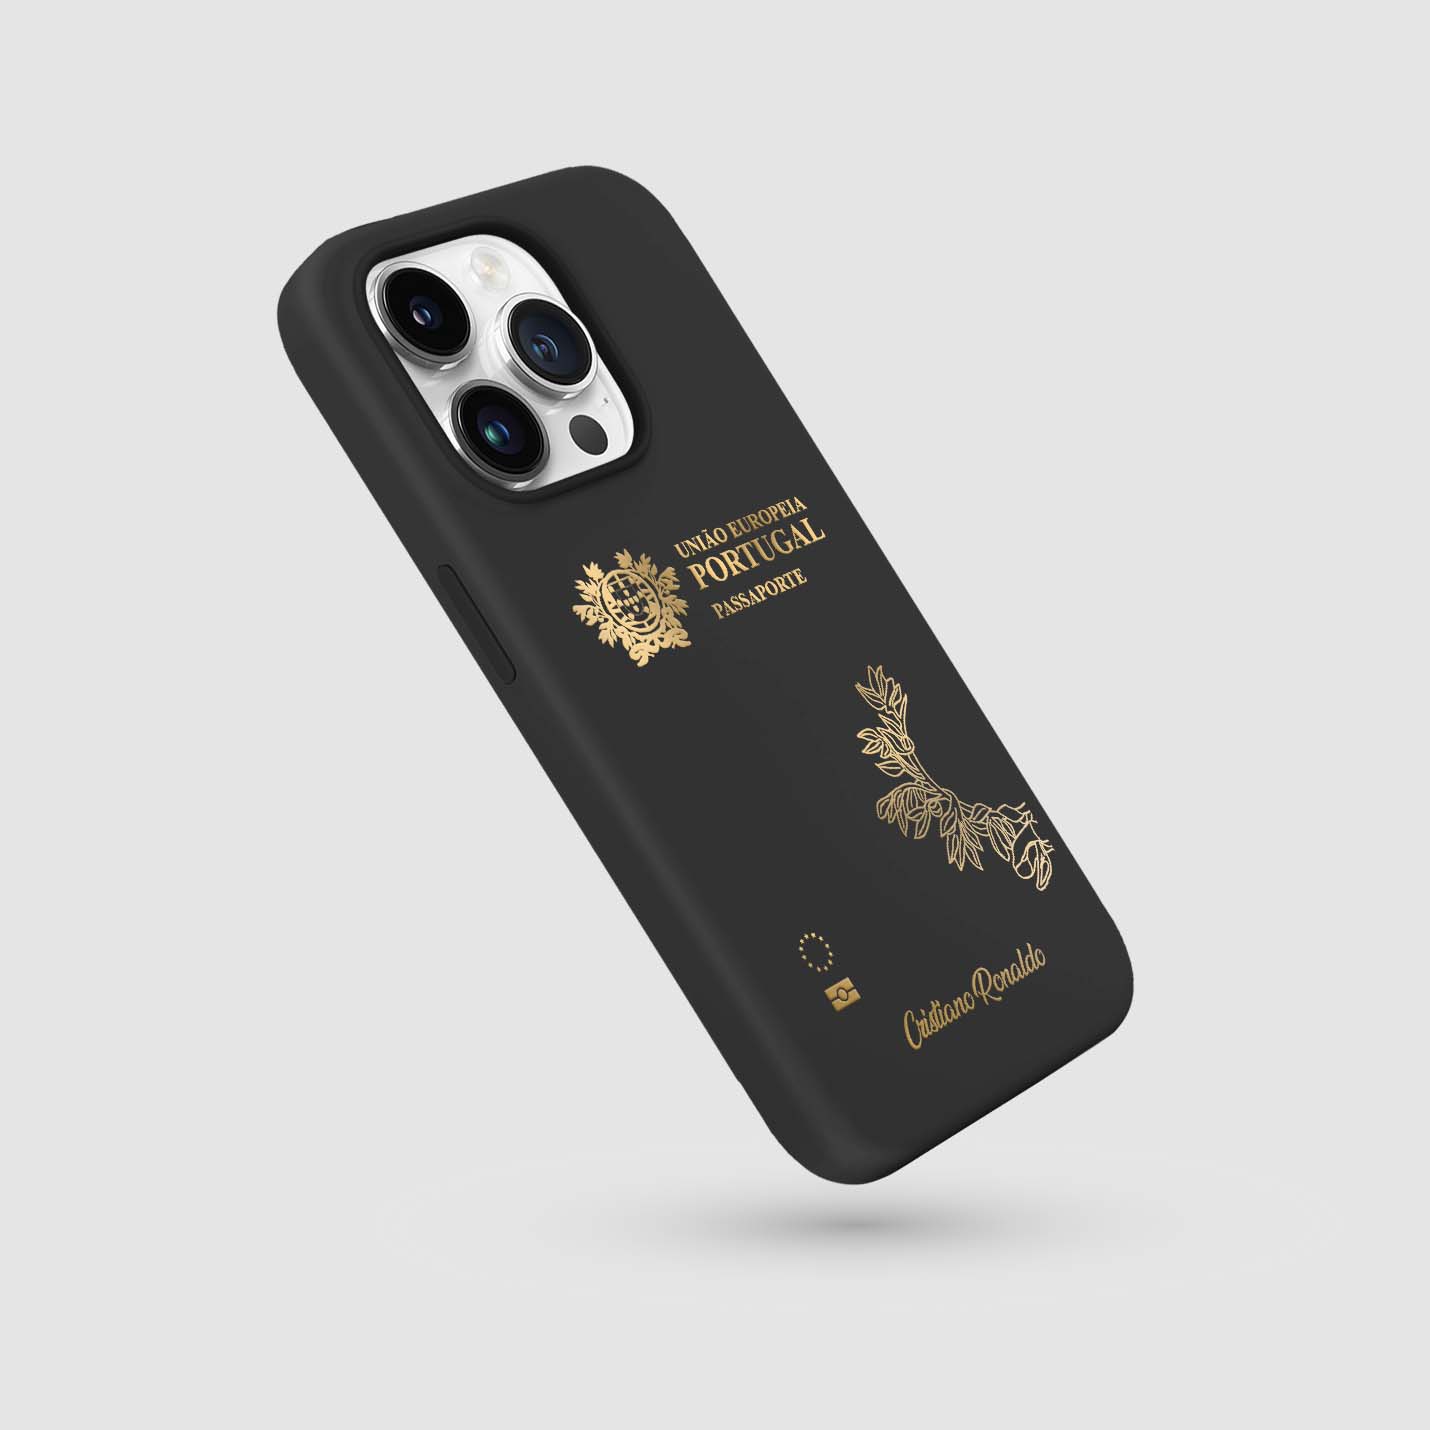 Handyhüllen mit Reisepass - Portugal - 1instaphone